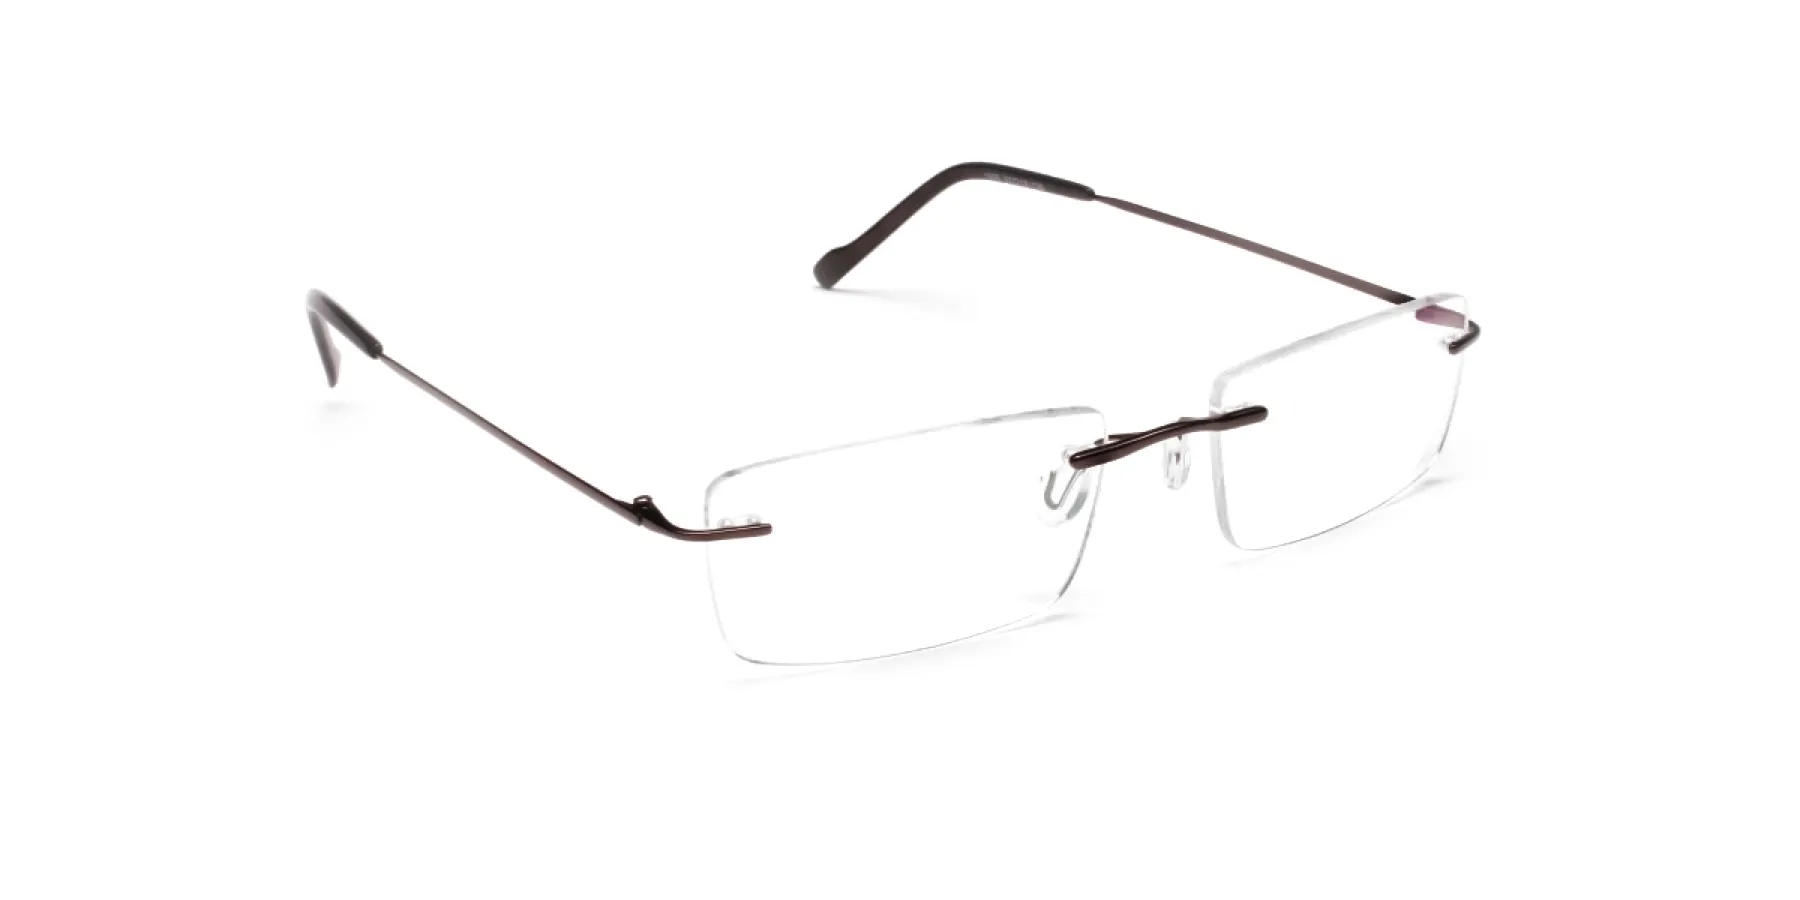 Rimless Glasses in Brown for Men & Women - 2